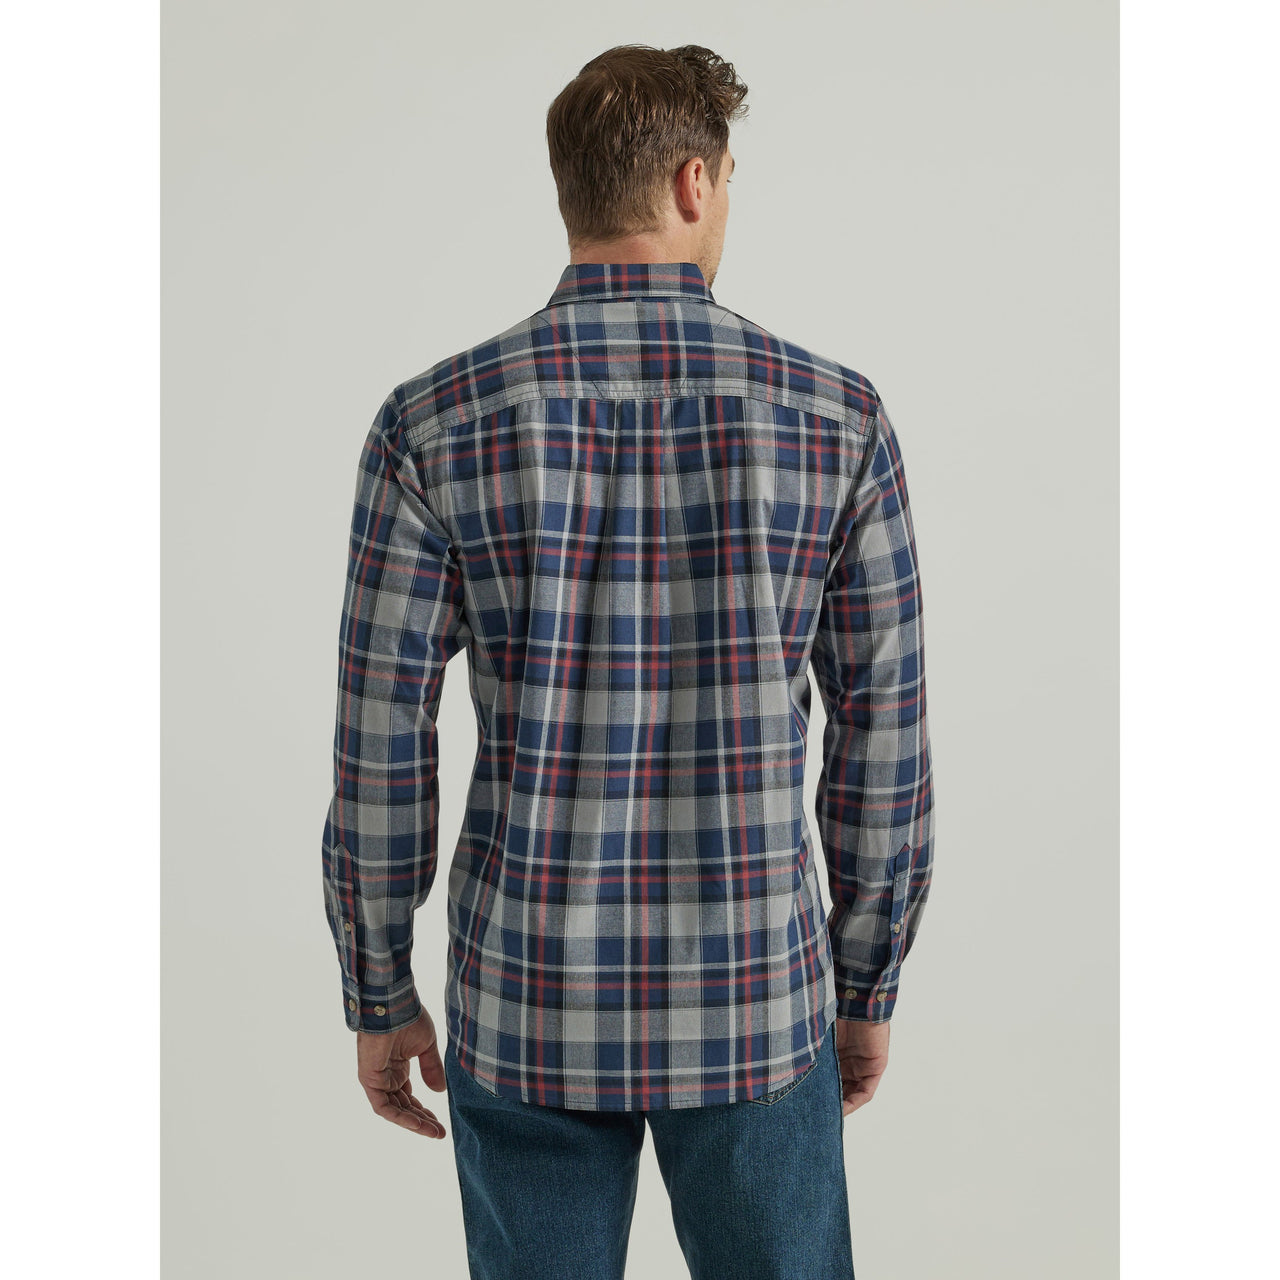 Wrangler Rugged Wear Blue Ridge Plaid Long Sleeve Shirt - Navy